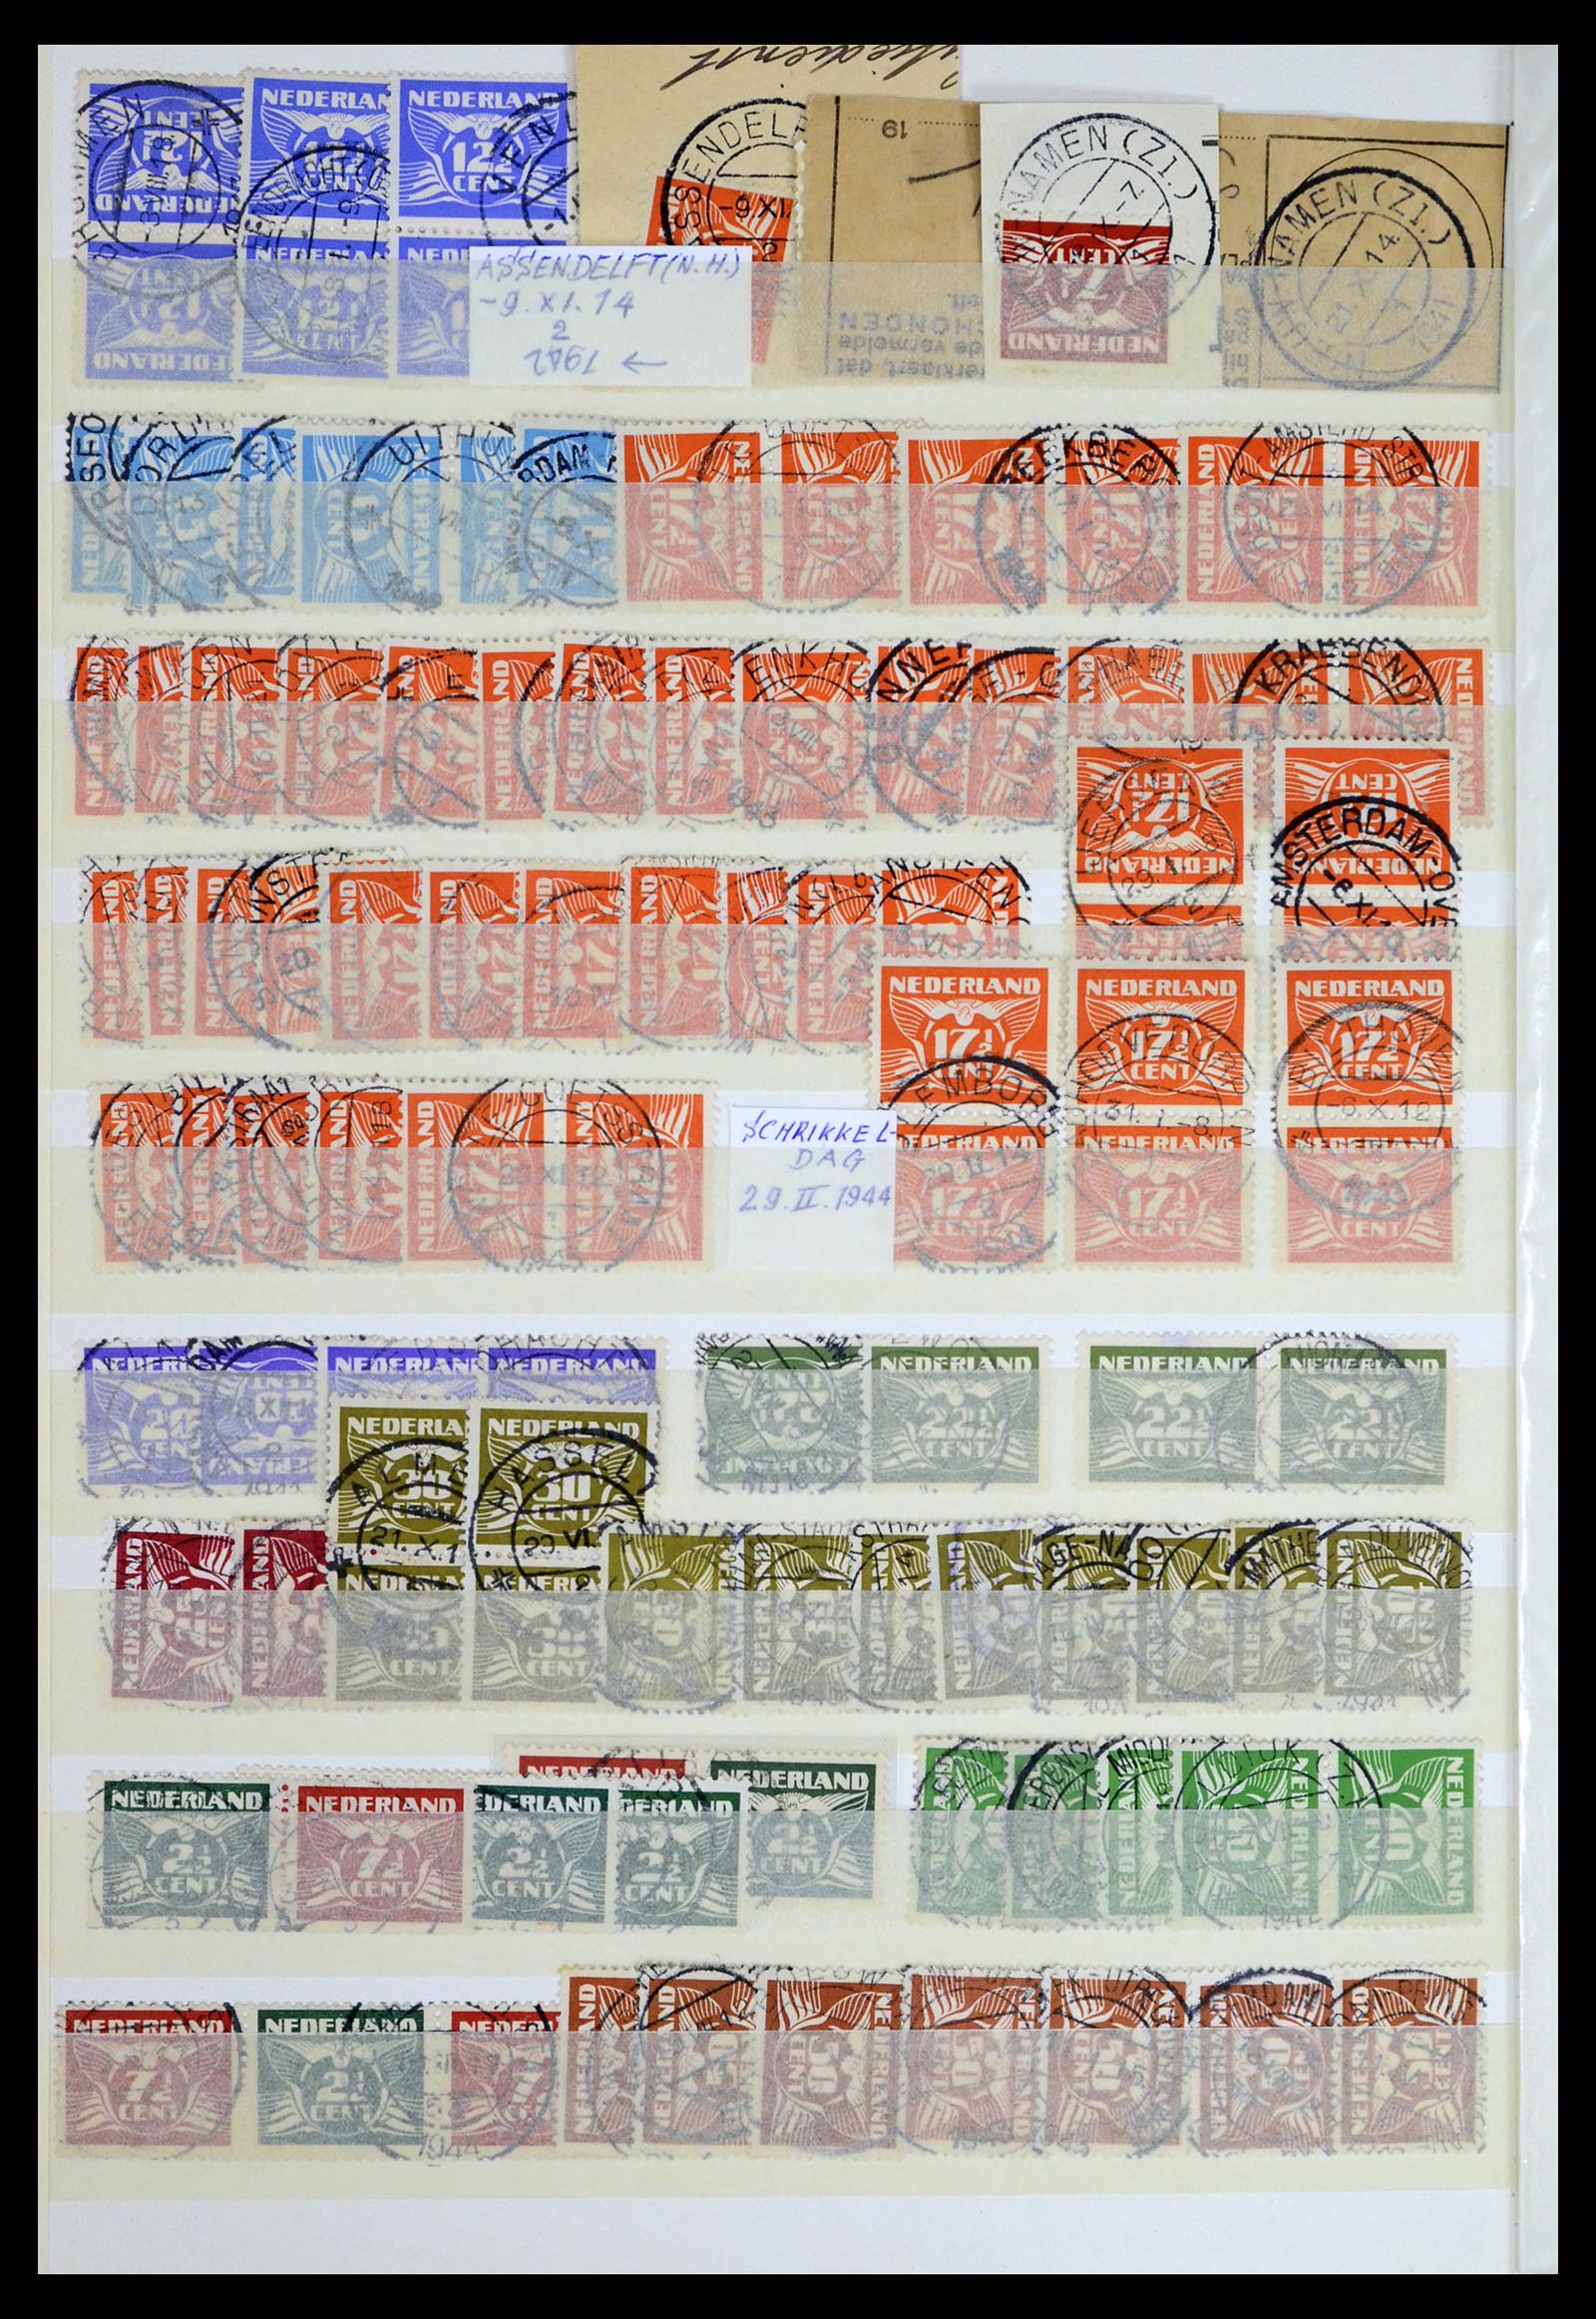 37424 032 - Stamp collection 37424 Netherlands shortbar cancels.